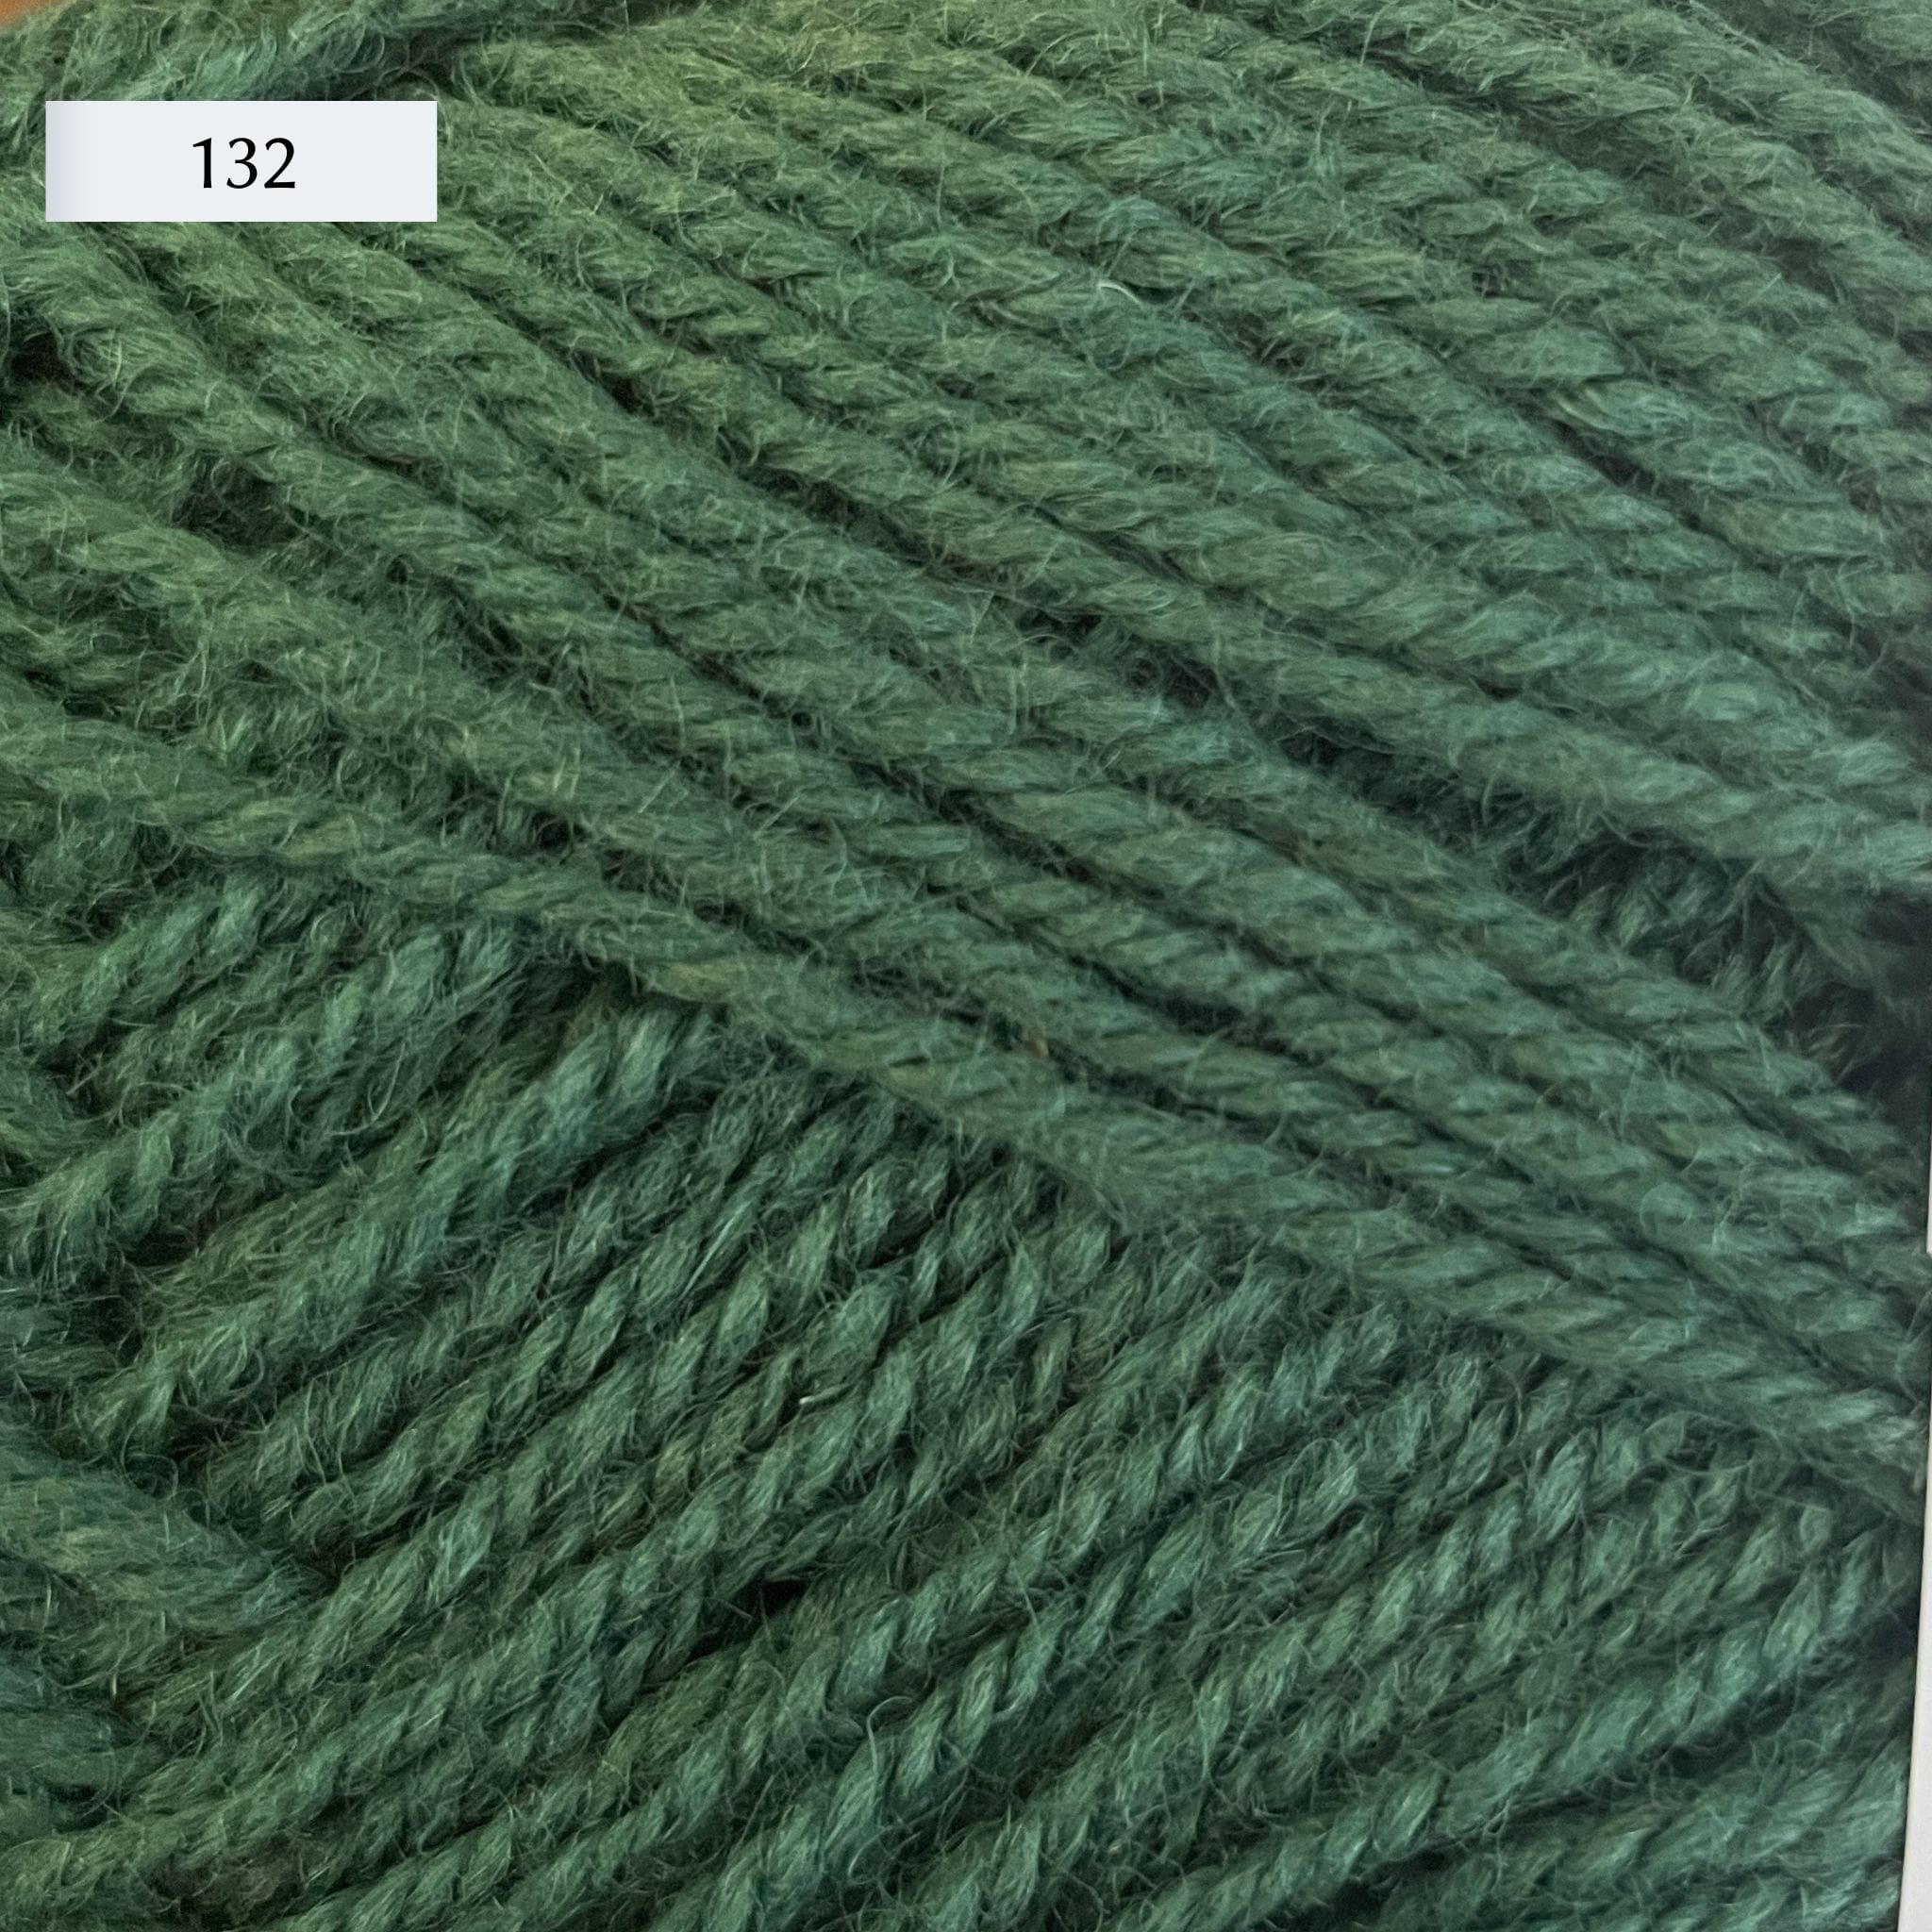 Rauma Strikkegarn, DK weight yarn, in color 132, cool dusty pine green